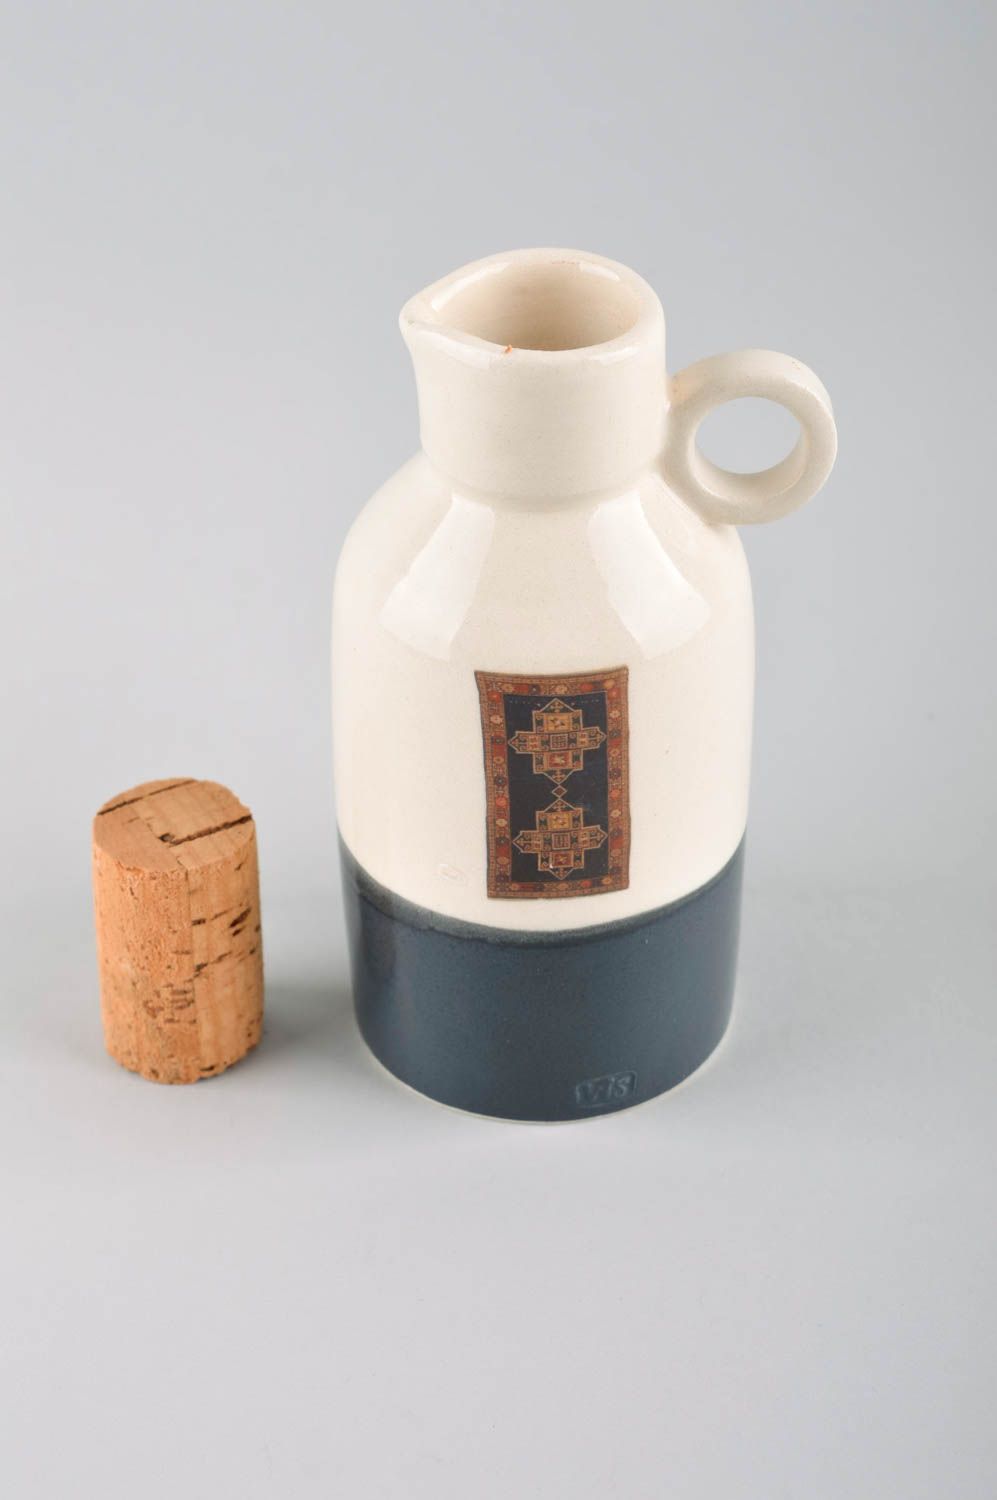 20 oz coffee handmade ceramic pitcher, jug with handle and lid handmade pottery 7, 0,7 lb photo 4